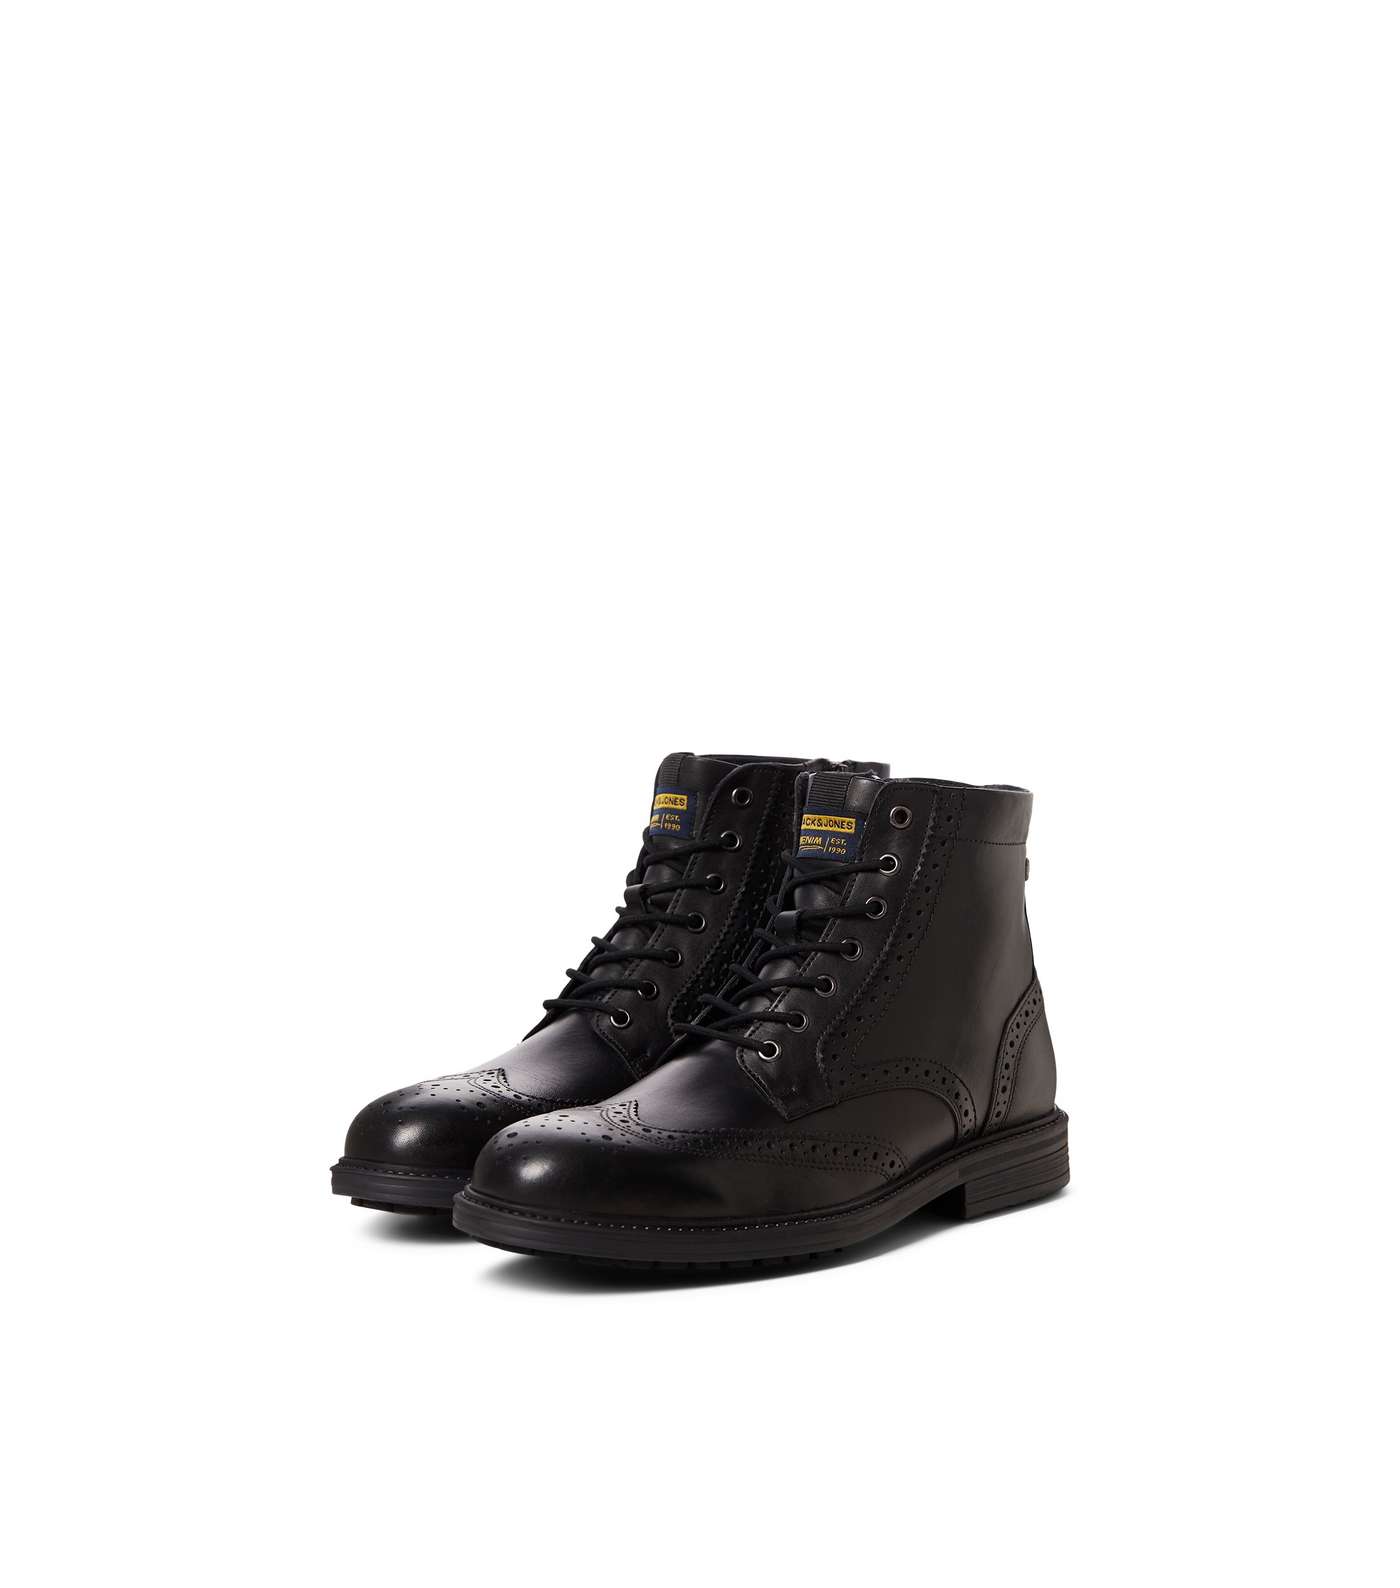 Jack & Jones Black Leather-Look Brogue Lace Up Boots Image 2